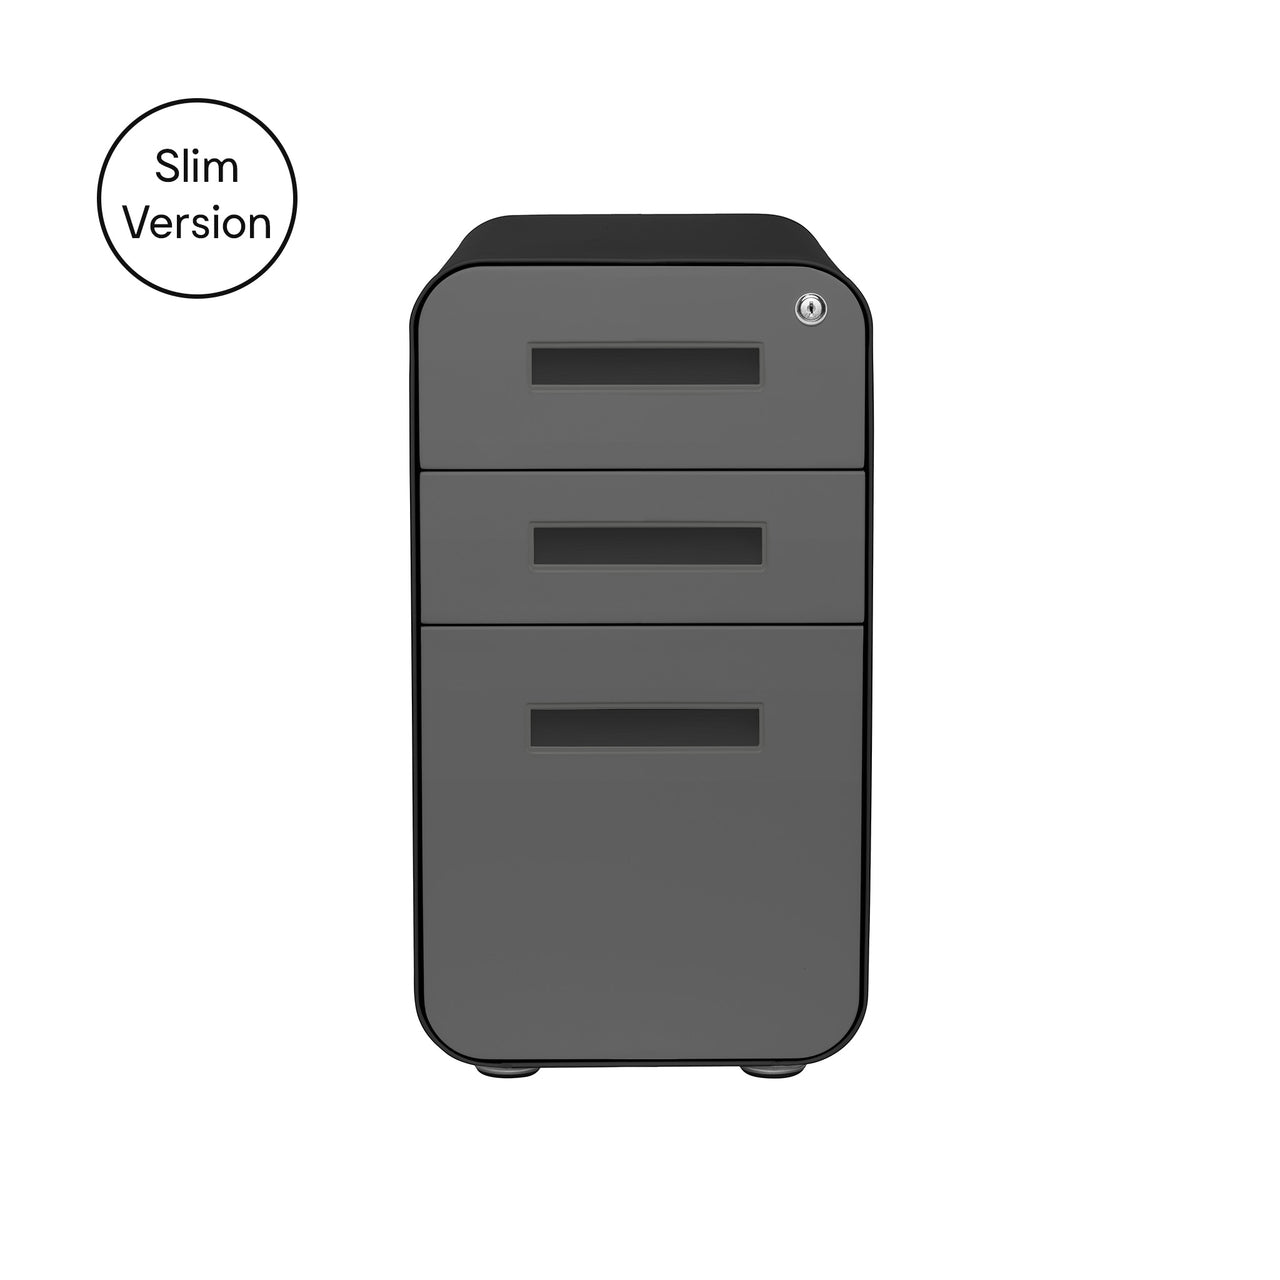 Stockpile Slim File Cabinet (Black/Grey)